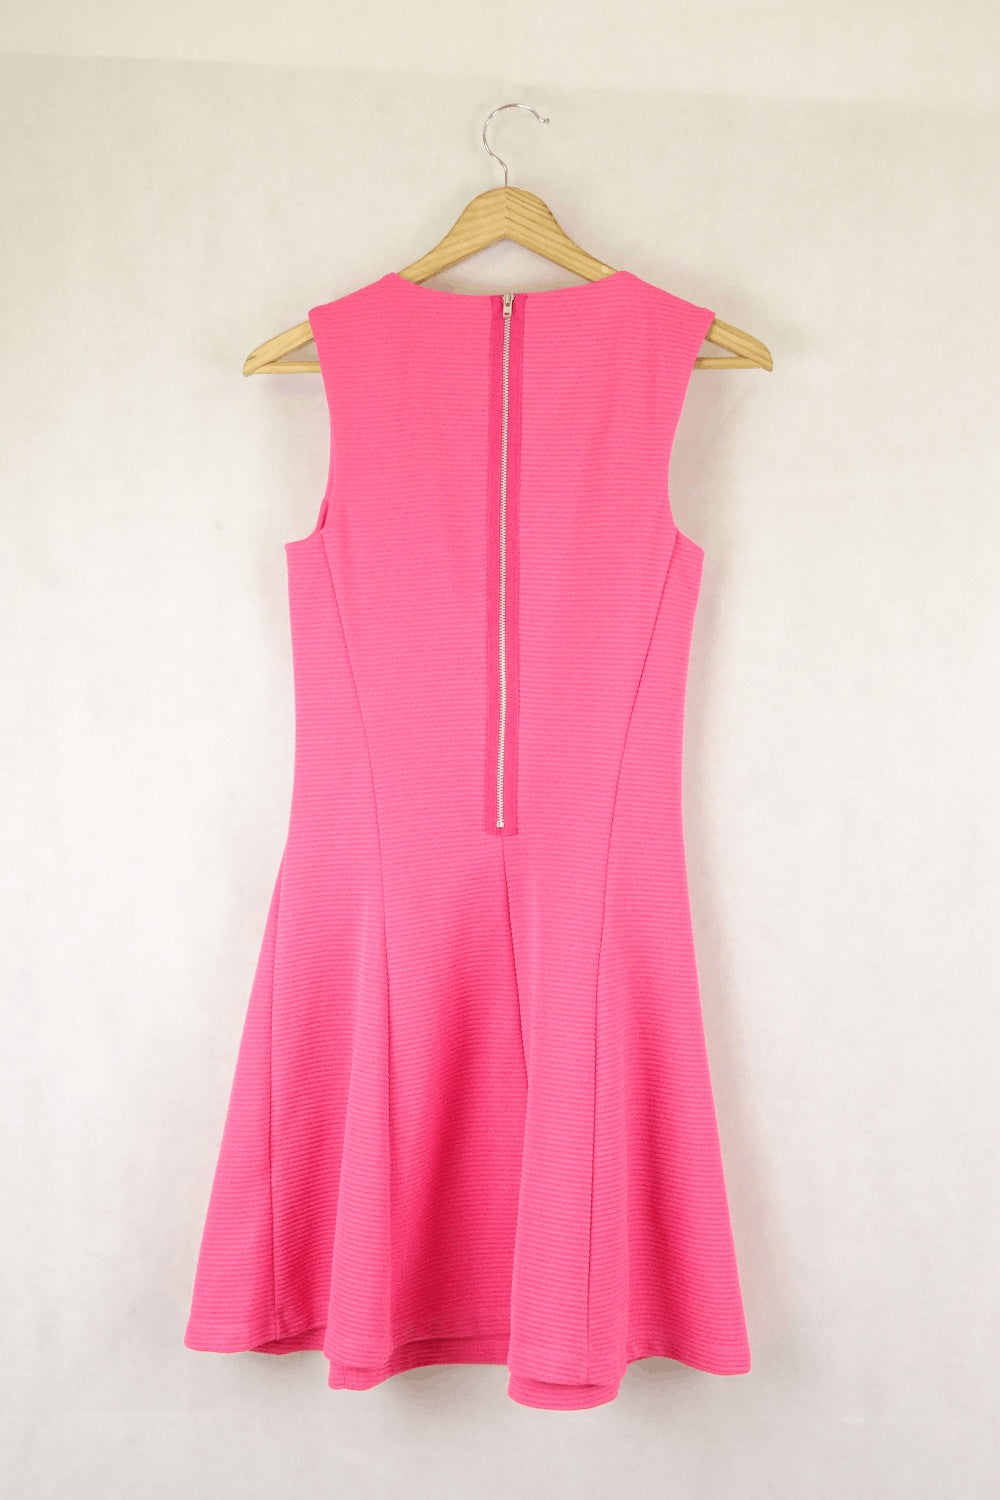 Asos Pink Dress 8 - CLAIMED